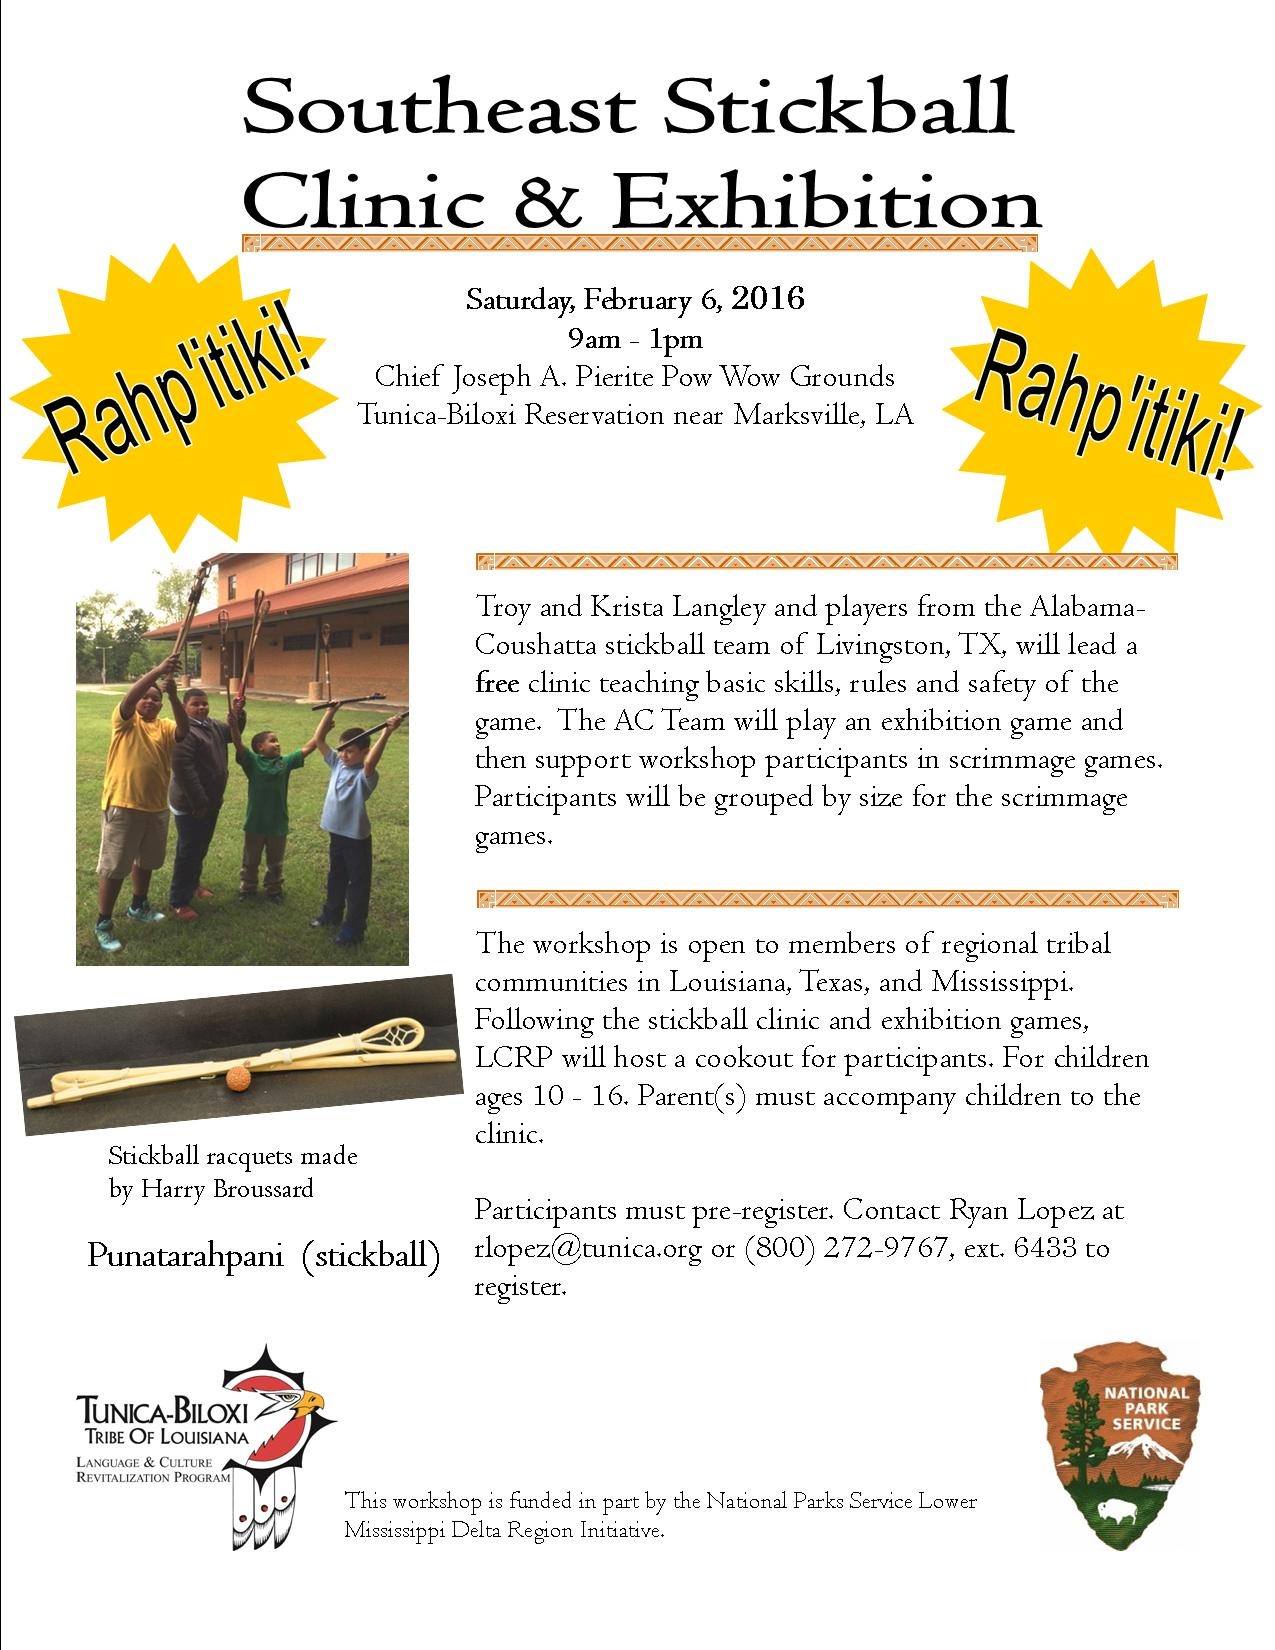 Tunica-Biloxi Tribe invites youth to stickball clinic and exhibition